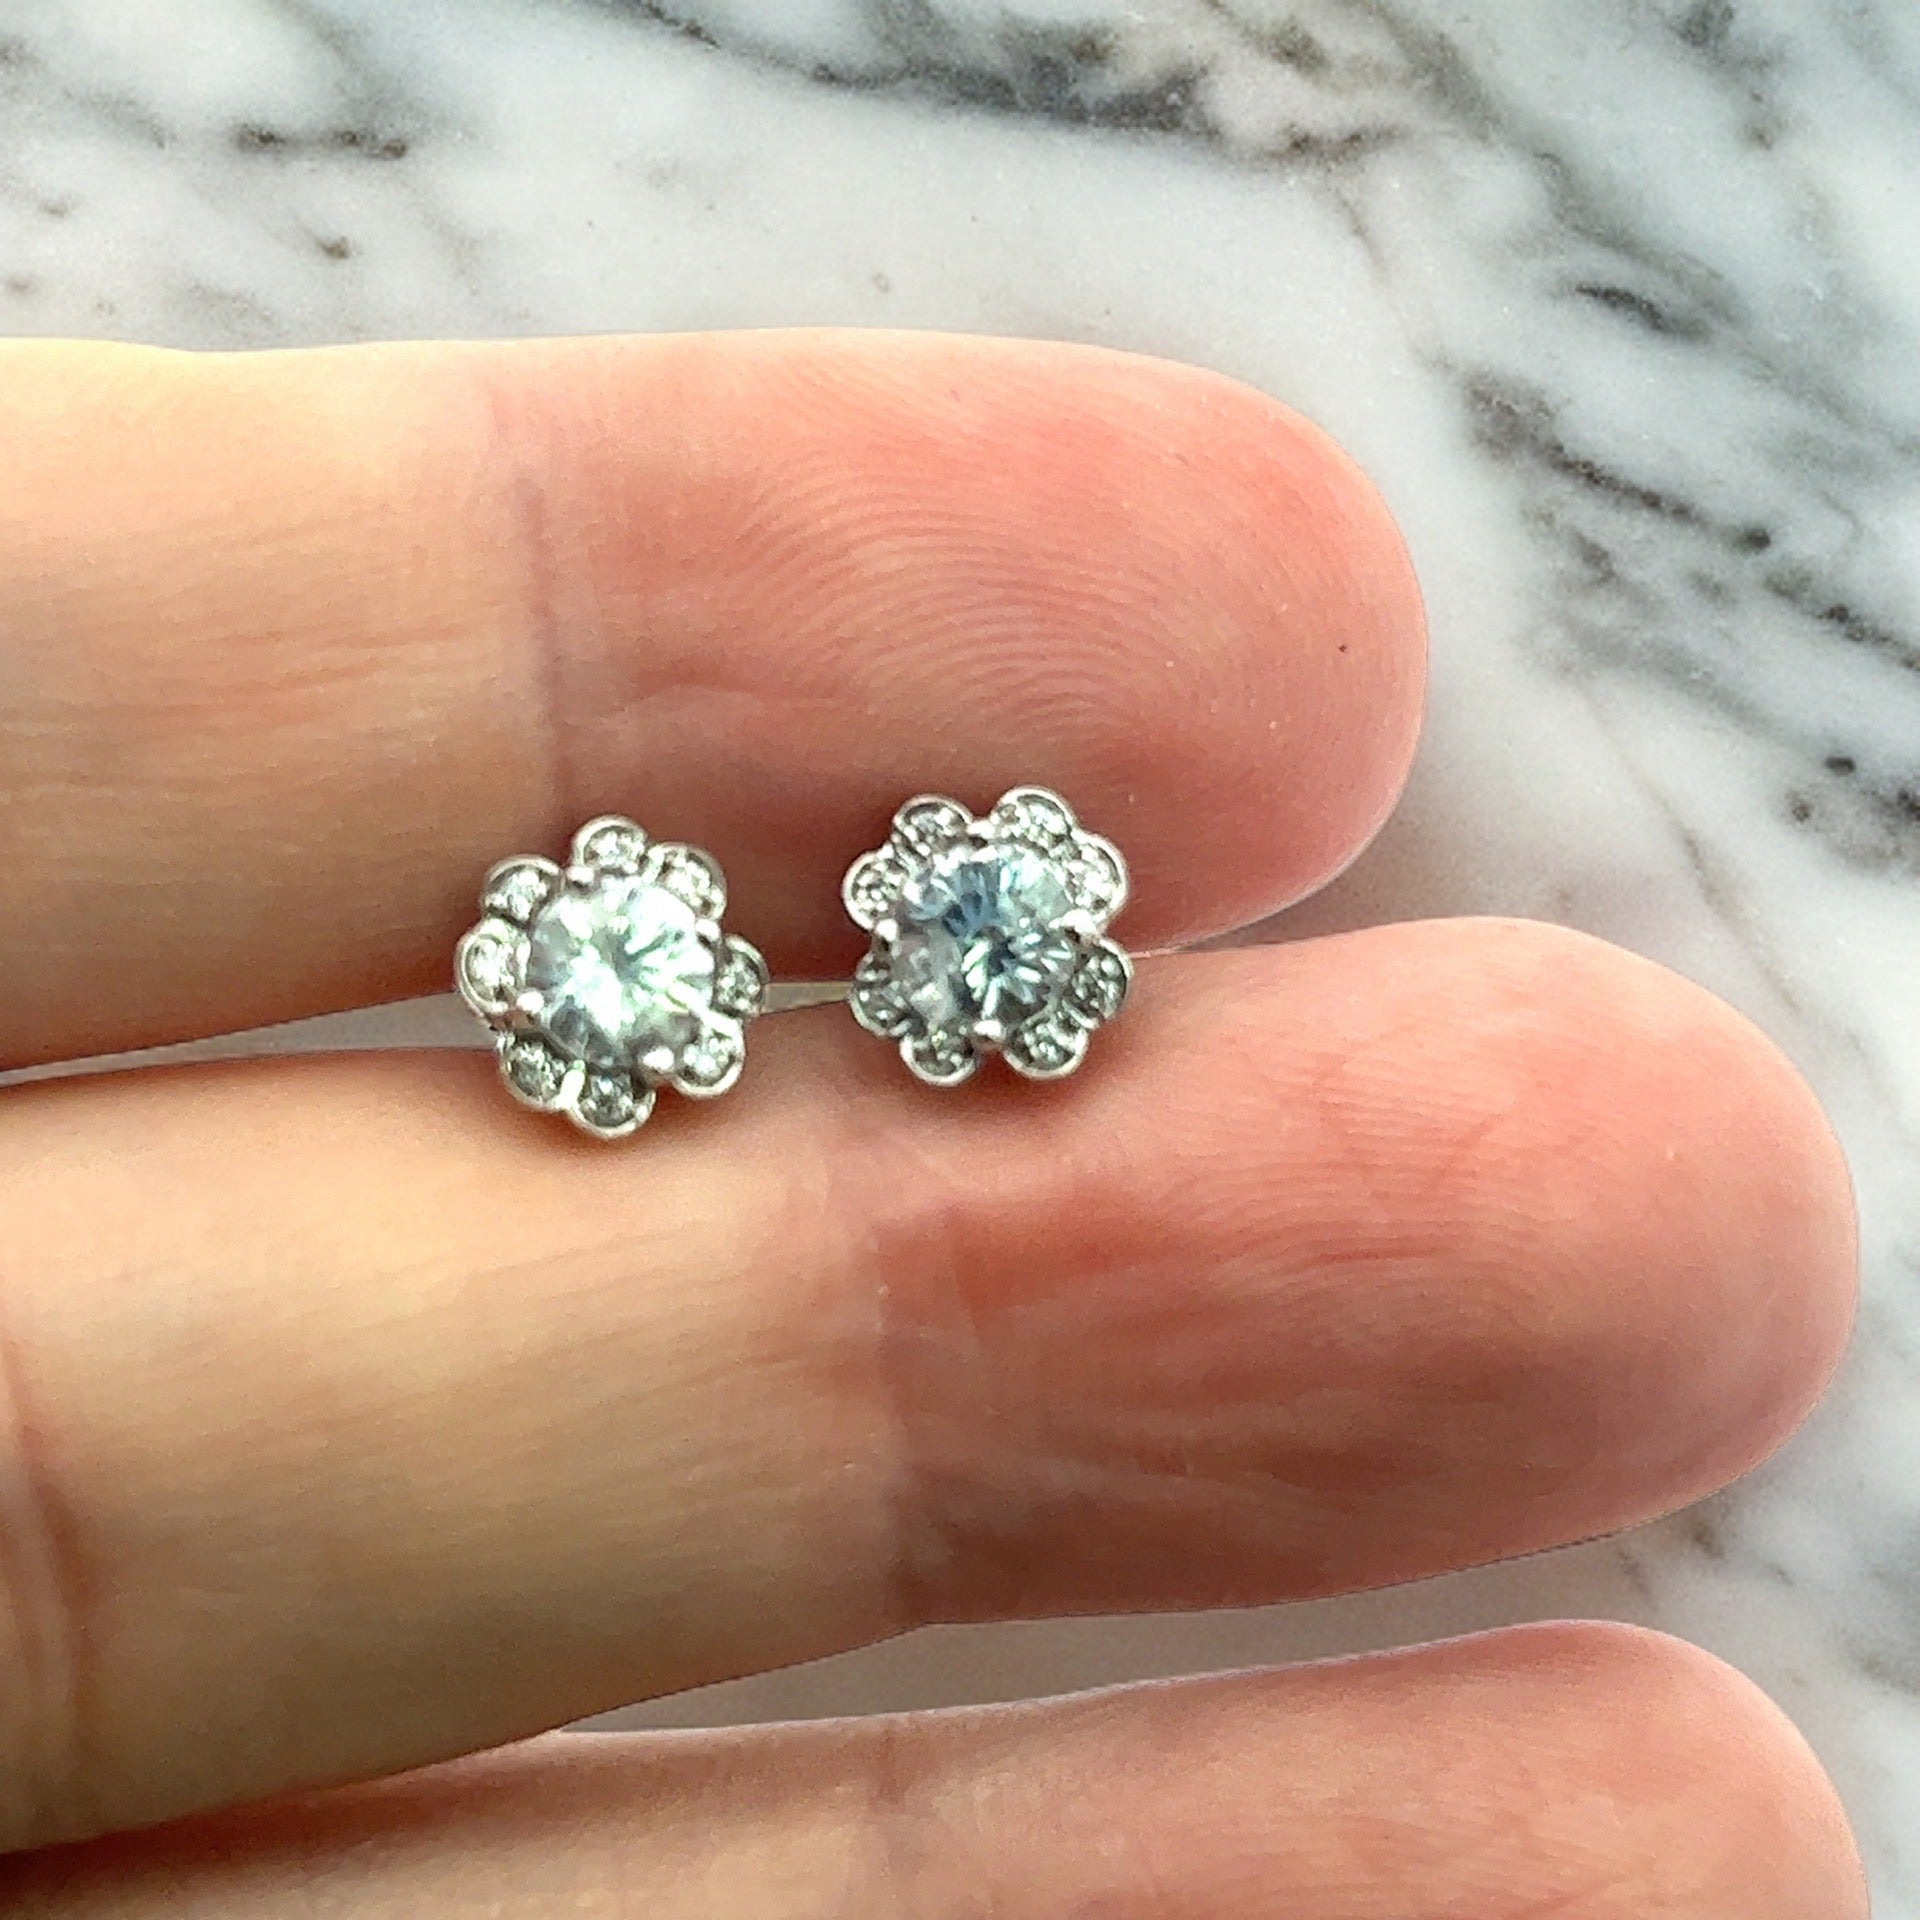 Natural Sapphire Diamond Stud Earrings 14k White Gold 1.62 TCW Certified $3,950 211169 - Certified Fine Jewelry